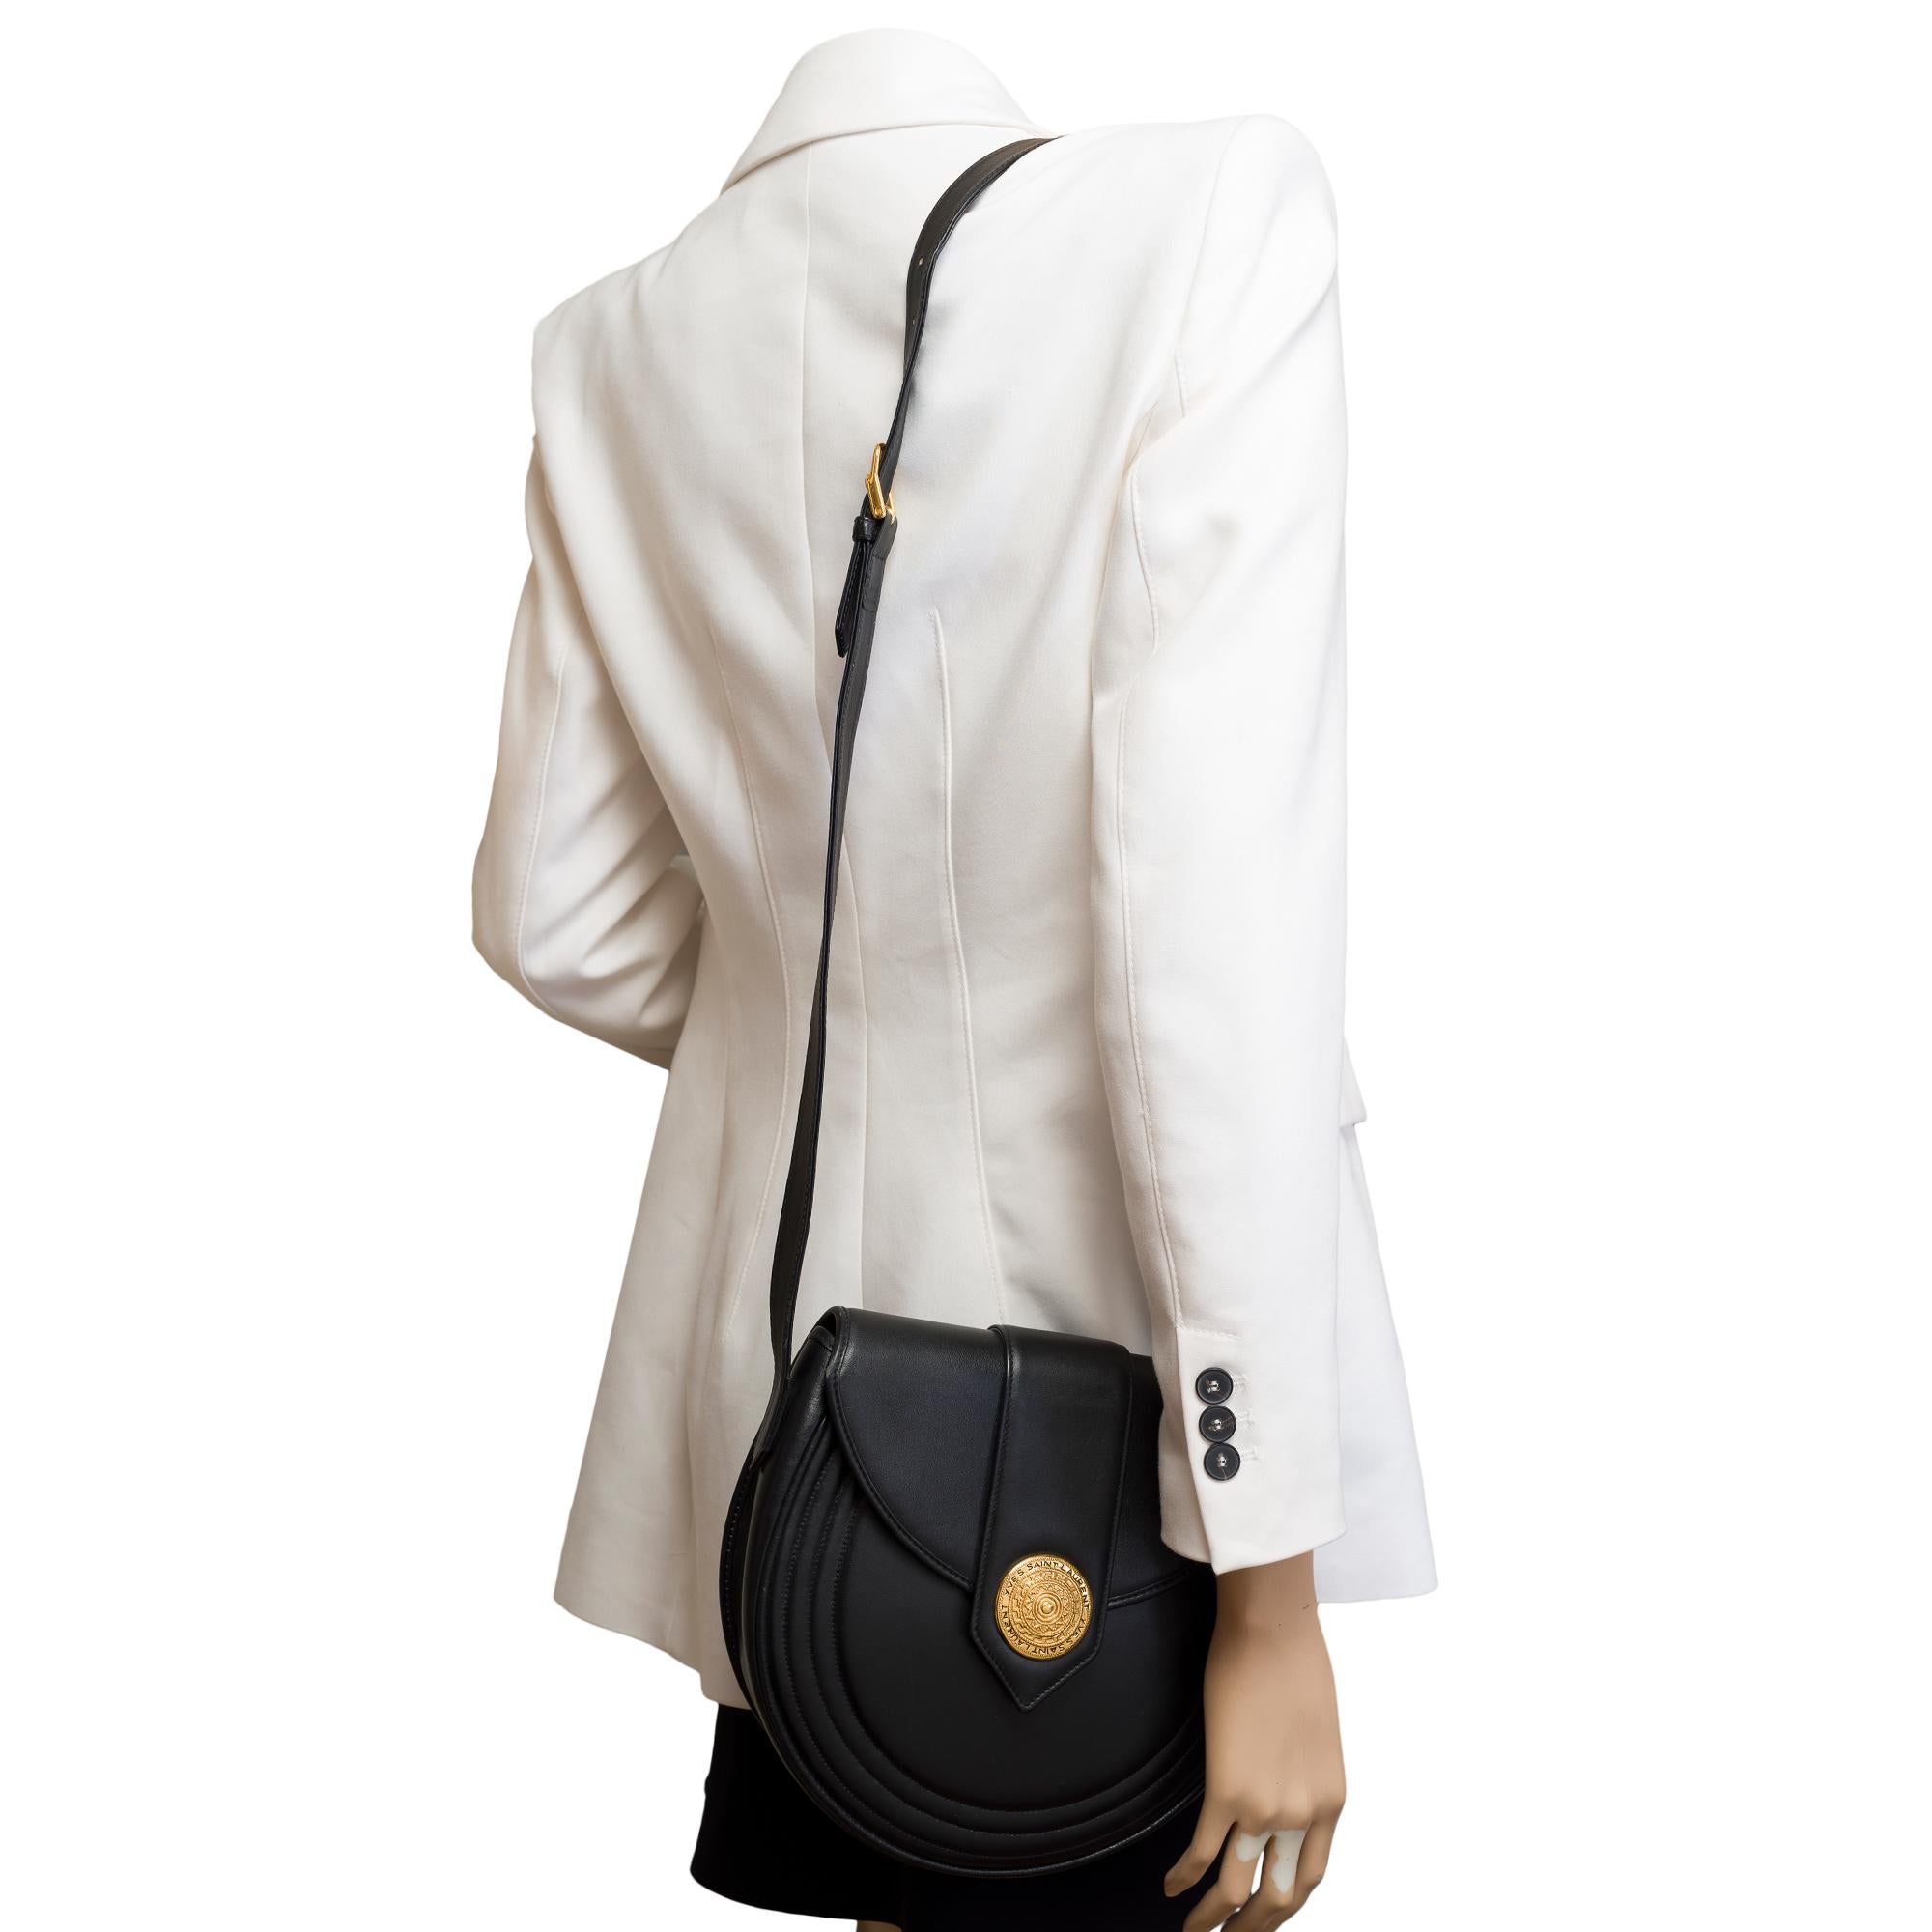 Lovely YSL shoulder bag in the shape of a half moon in black leather, GHW 8